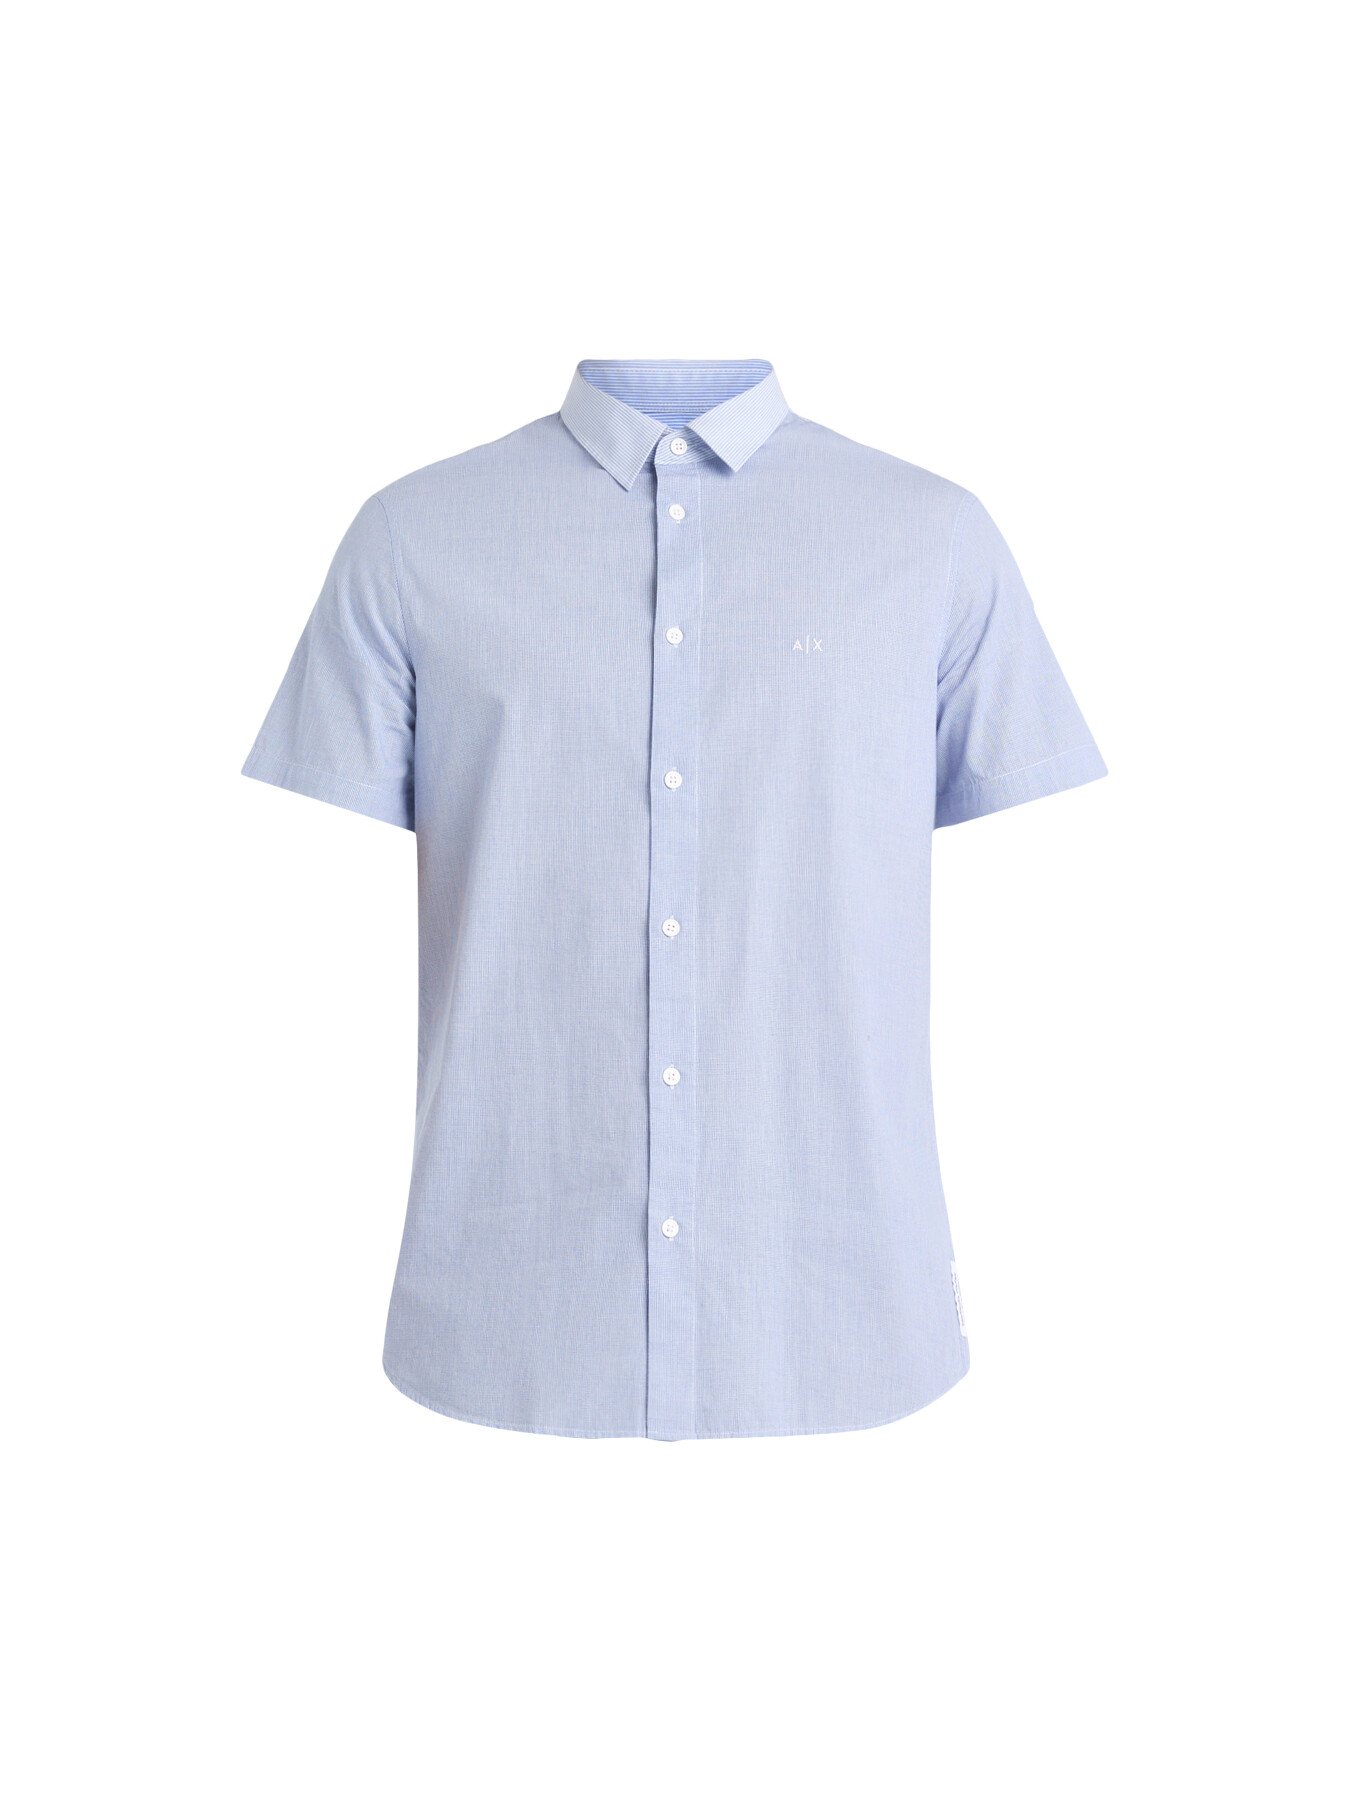 Armani Exchange Men's Check Short Sleeve Shirt Blue